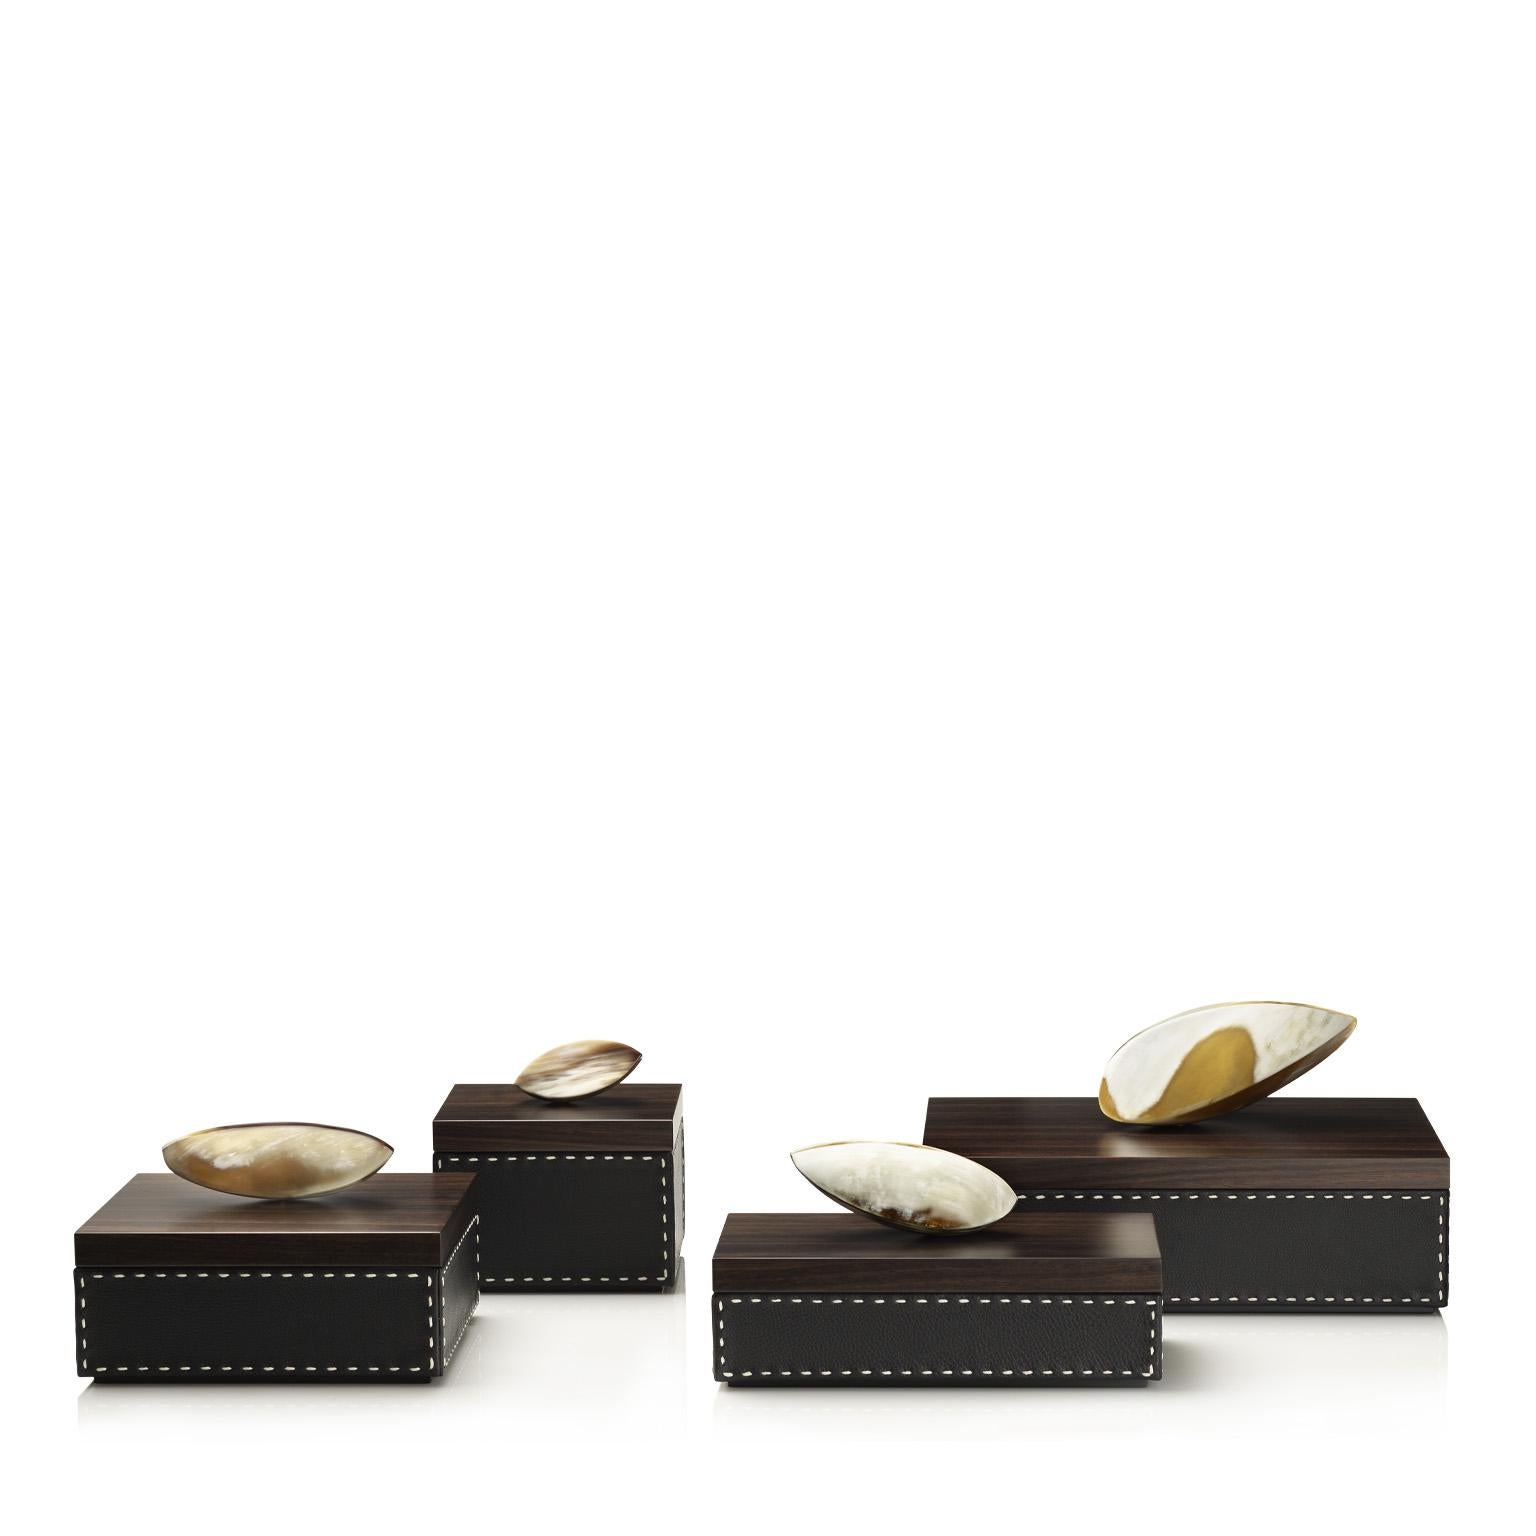 Capricia Box in Pebbled Leather with Handle in Corno Italiano, Mod. 4473 For Sale 2